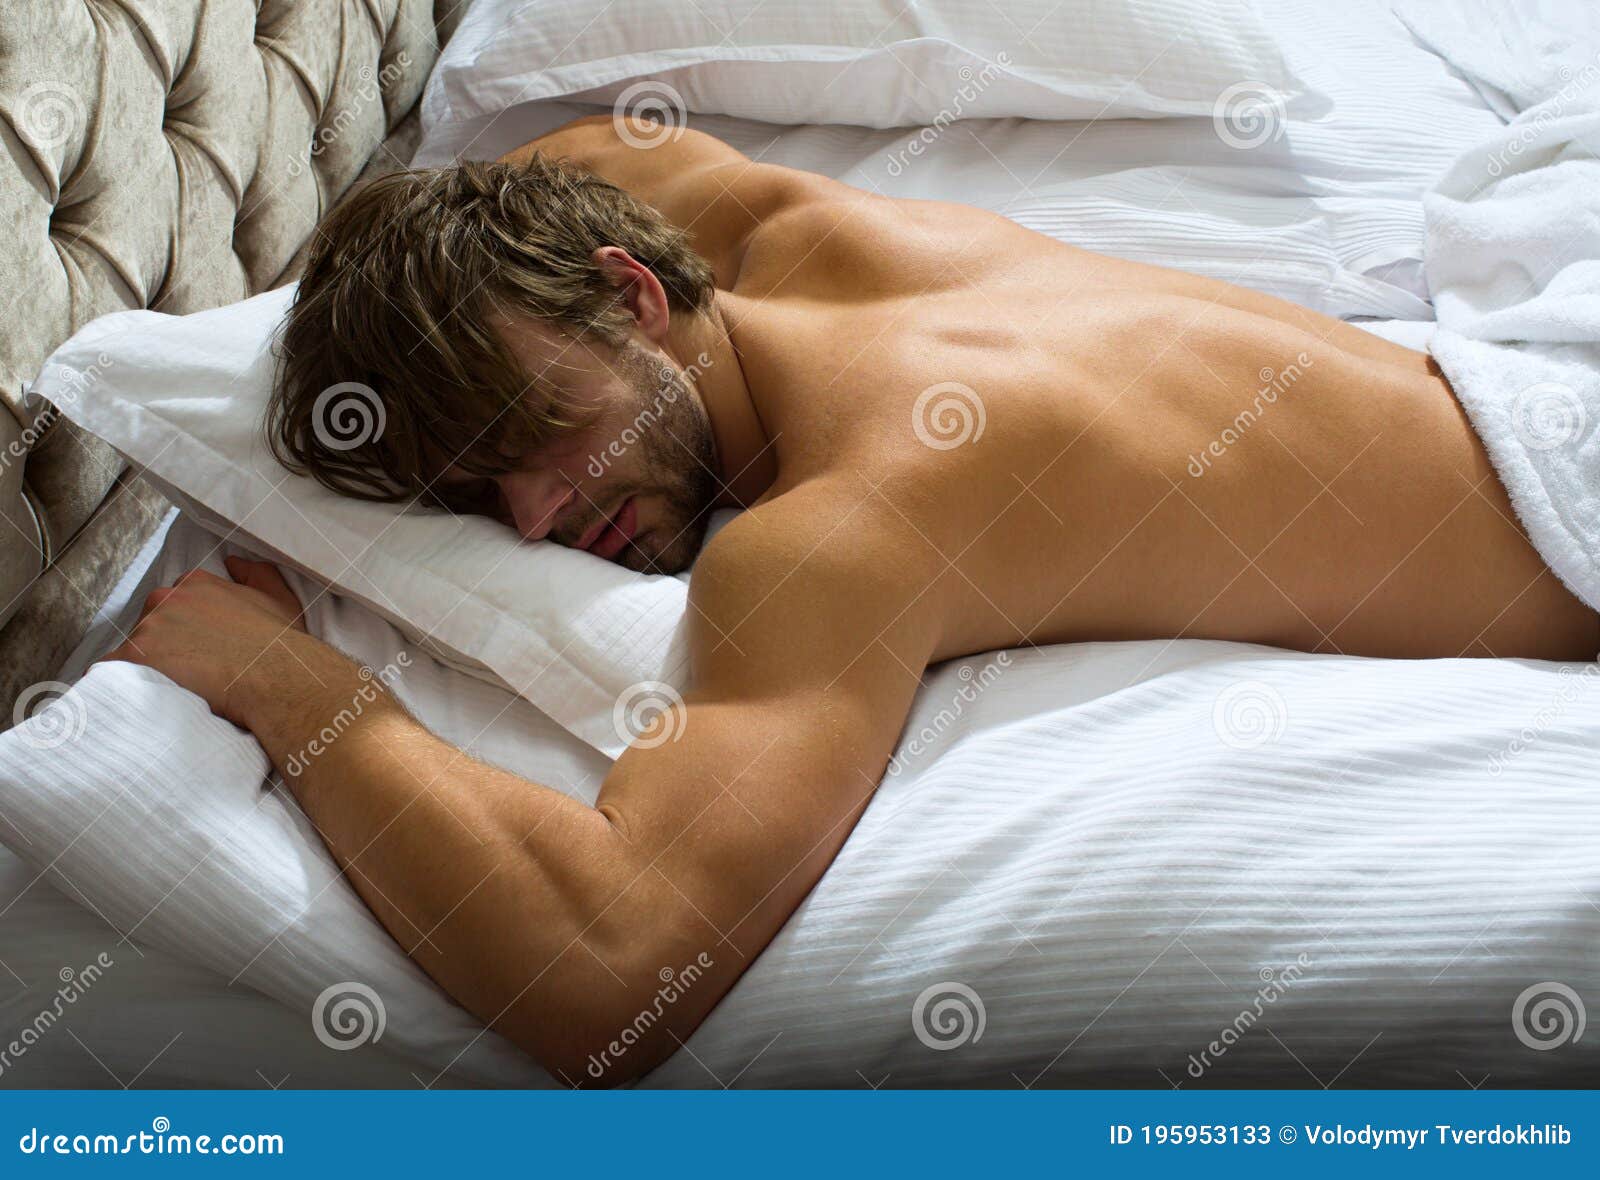 Boys Sleeping Naked Pics Eric Villency Dating